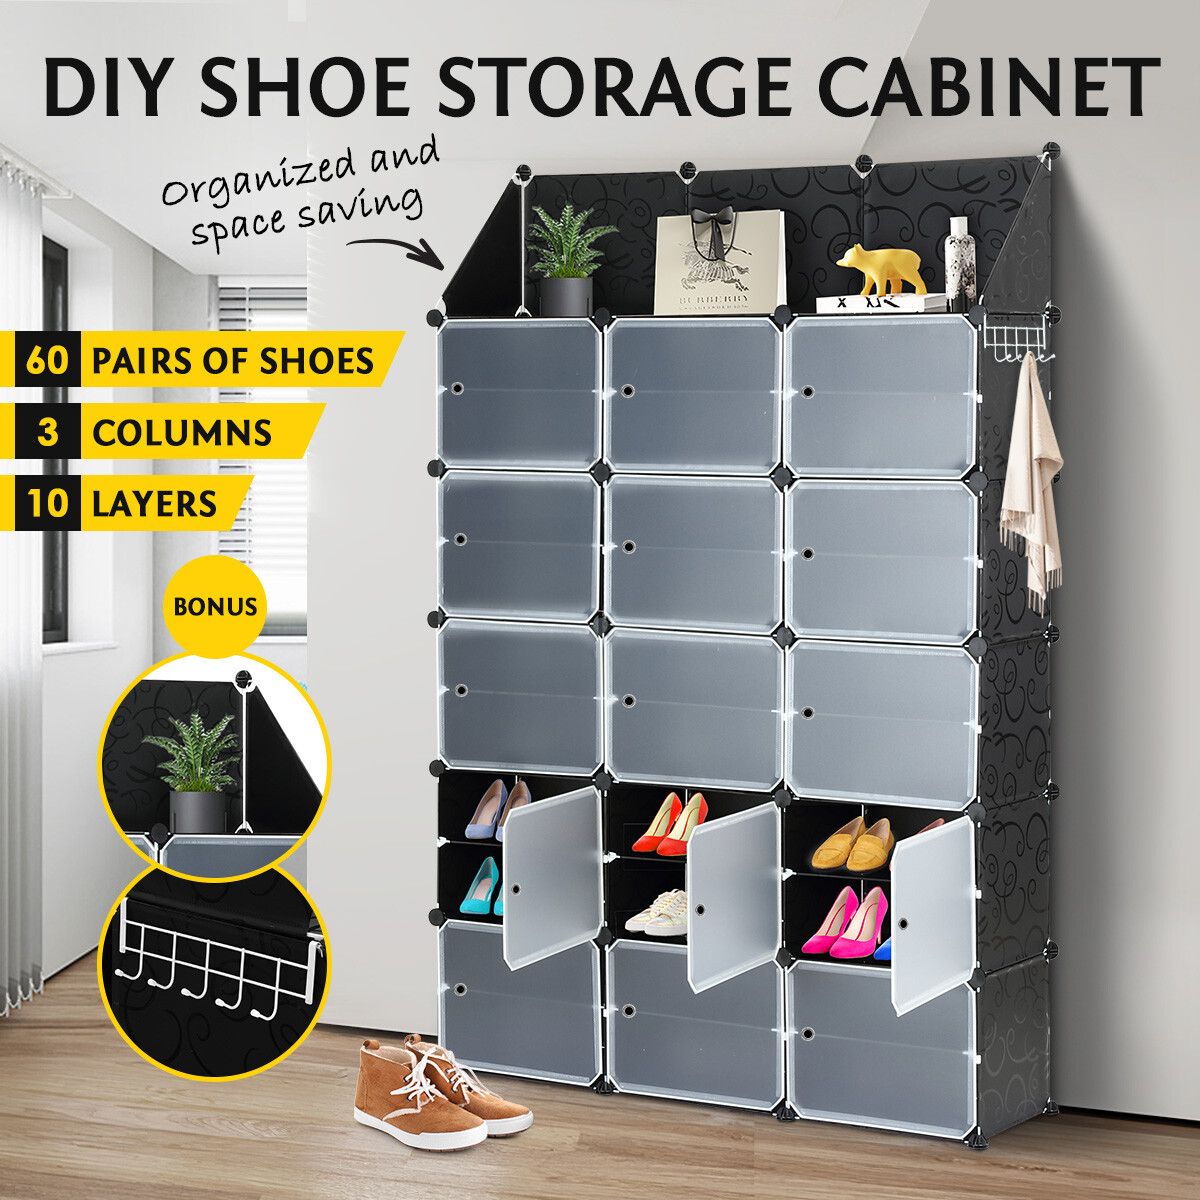 16 DIY Shoe Storage Hacks - YouTube